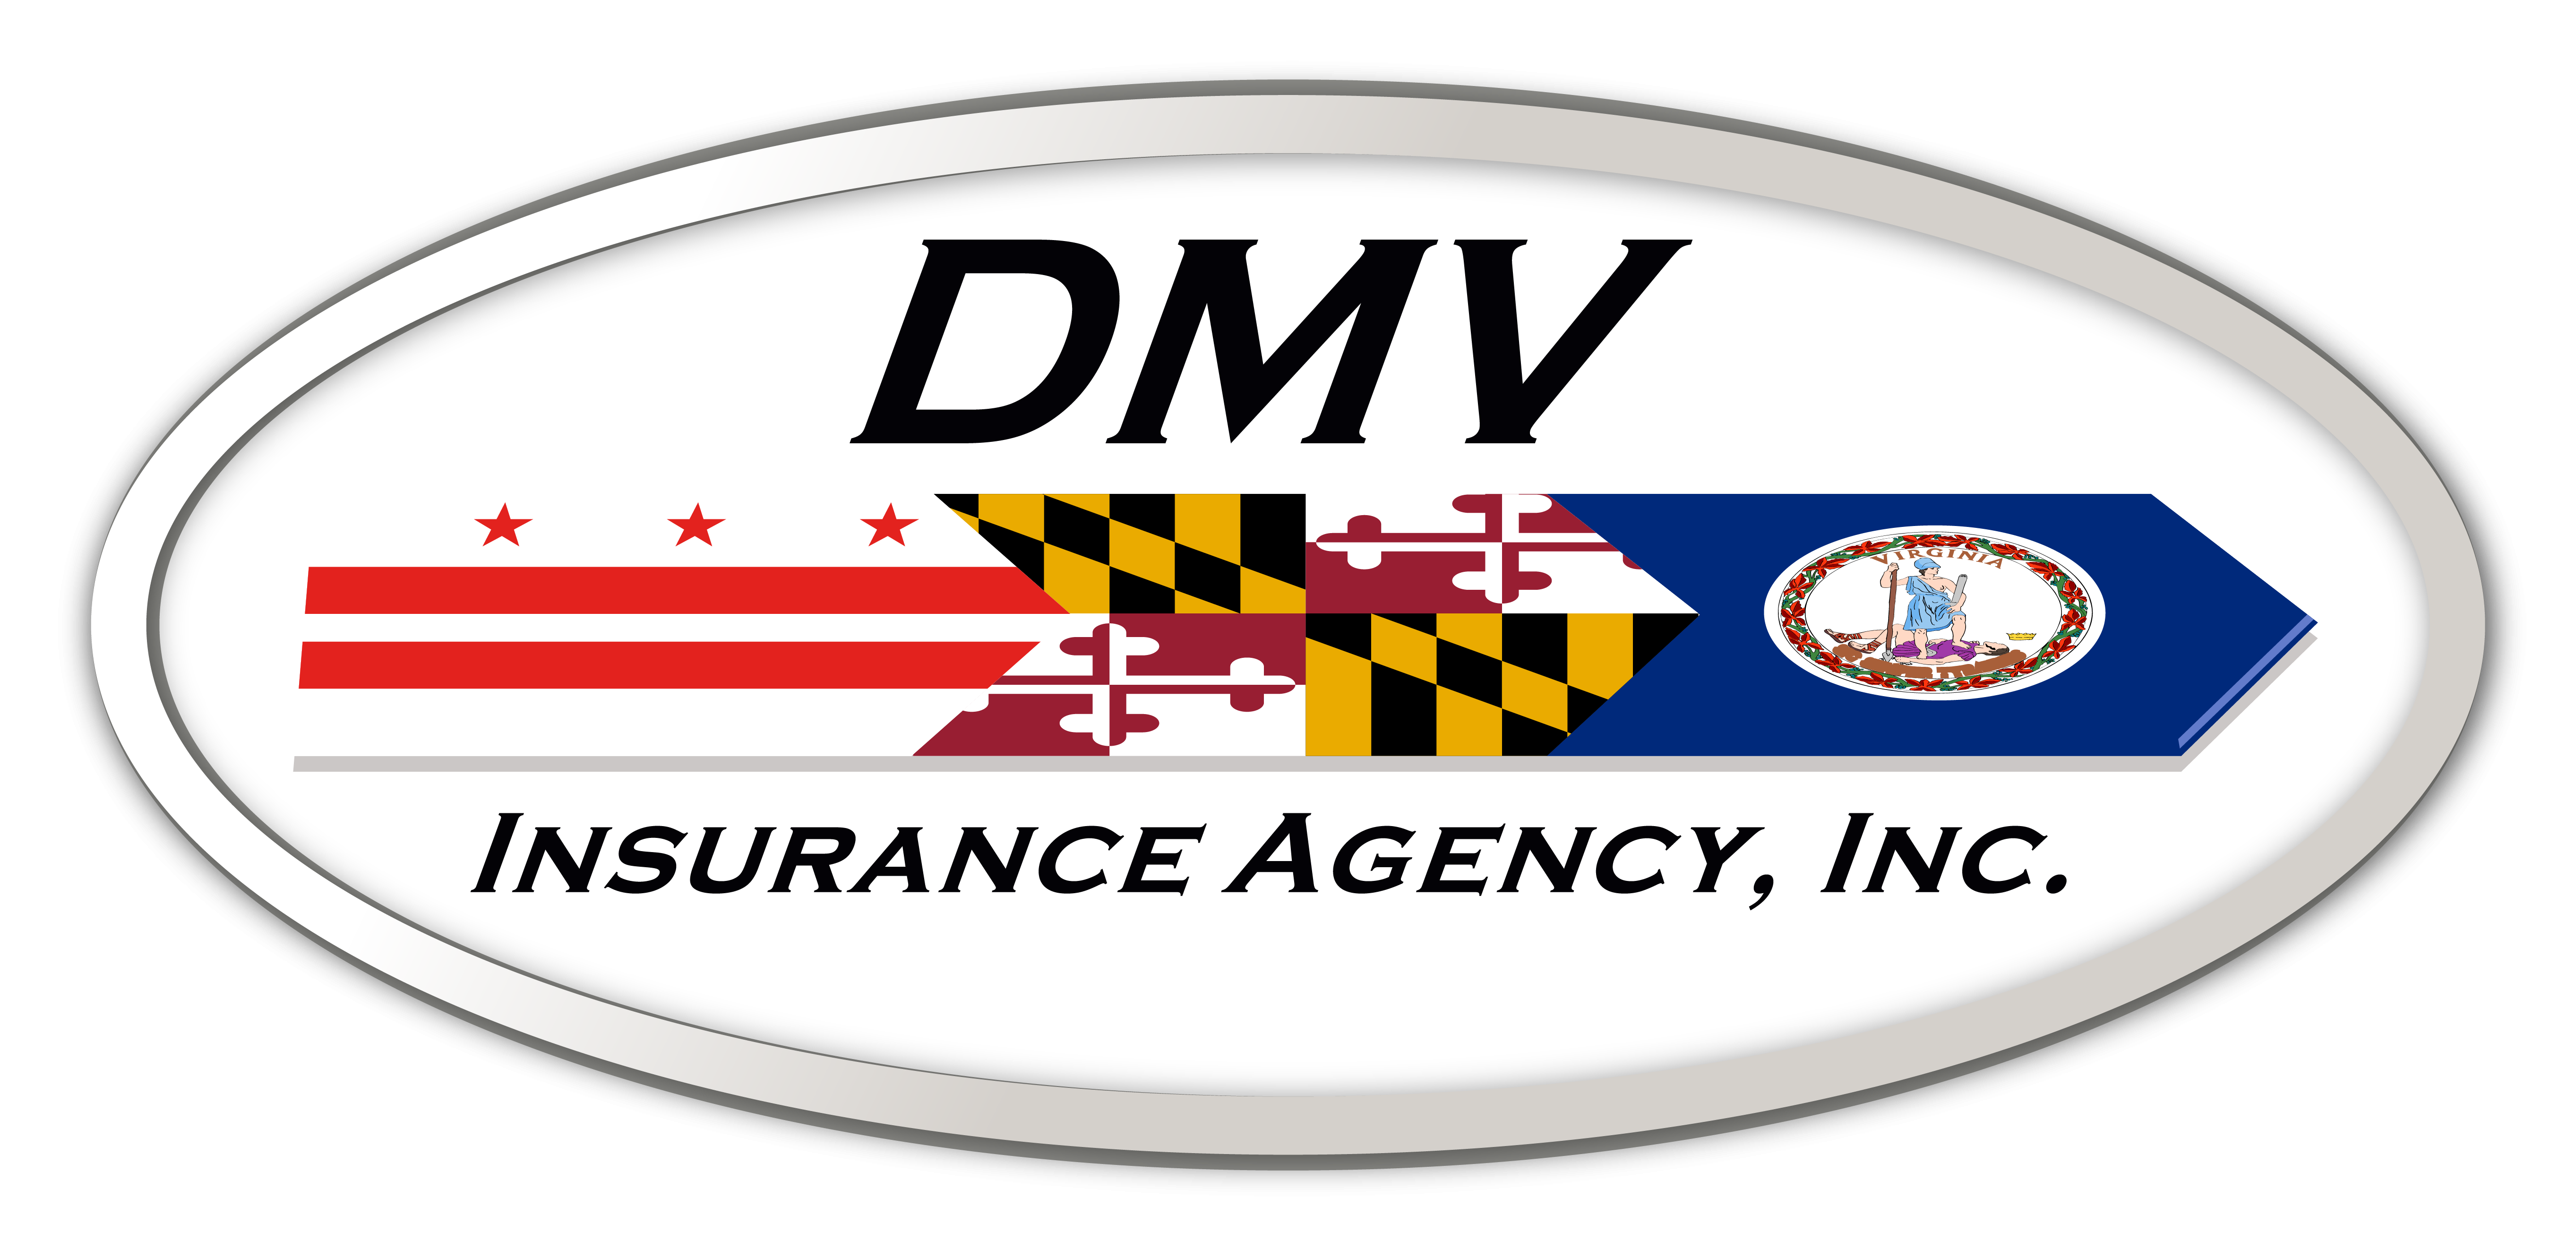 DMV Insurance Agency, Inc